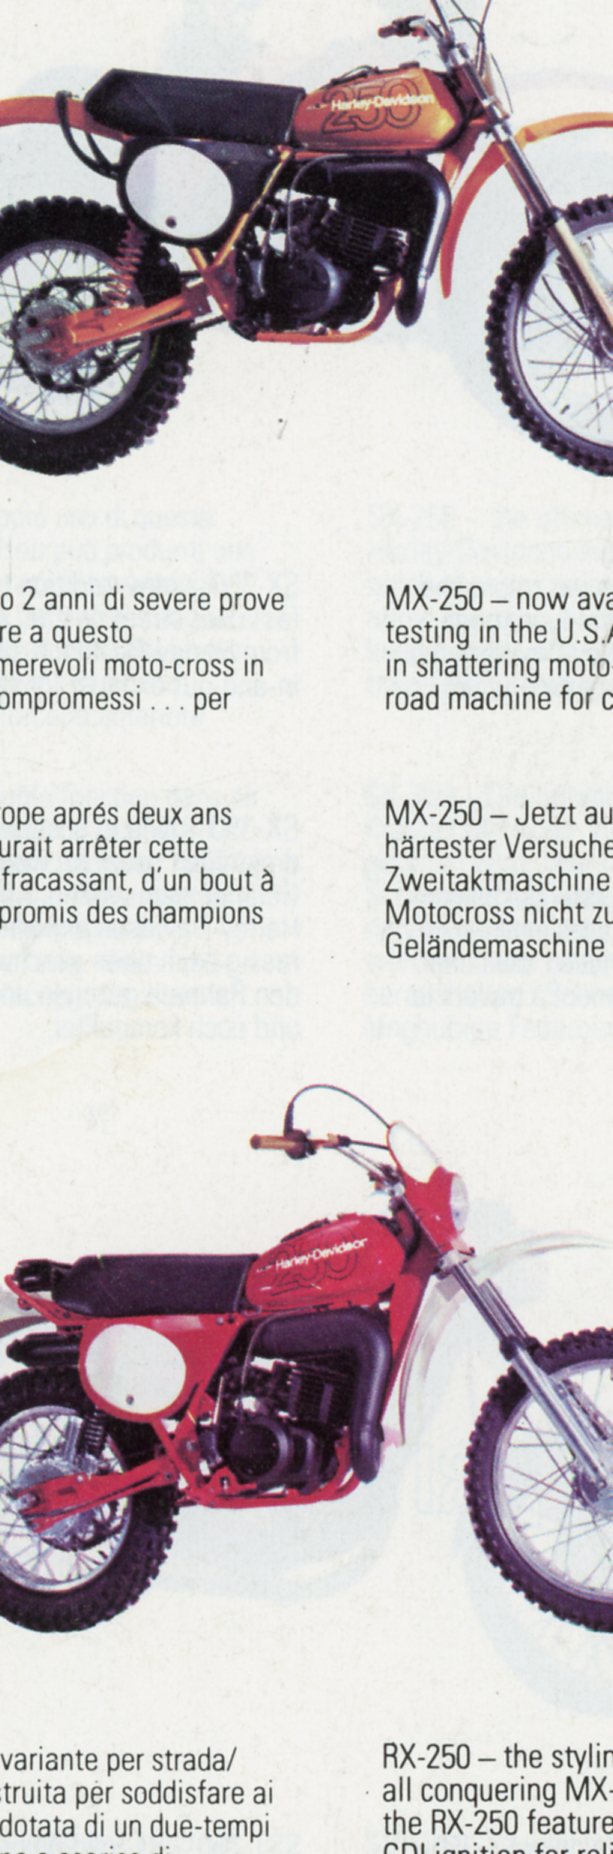 AMF HARLEY DAVIDSON MX250 RX250 BROCHURE MOTO